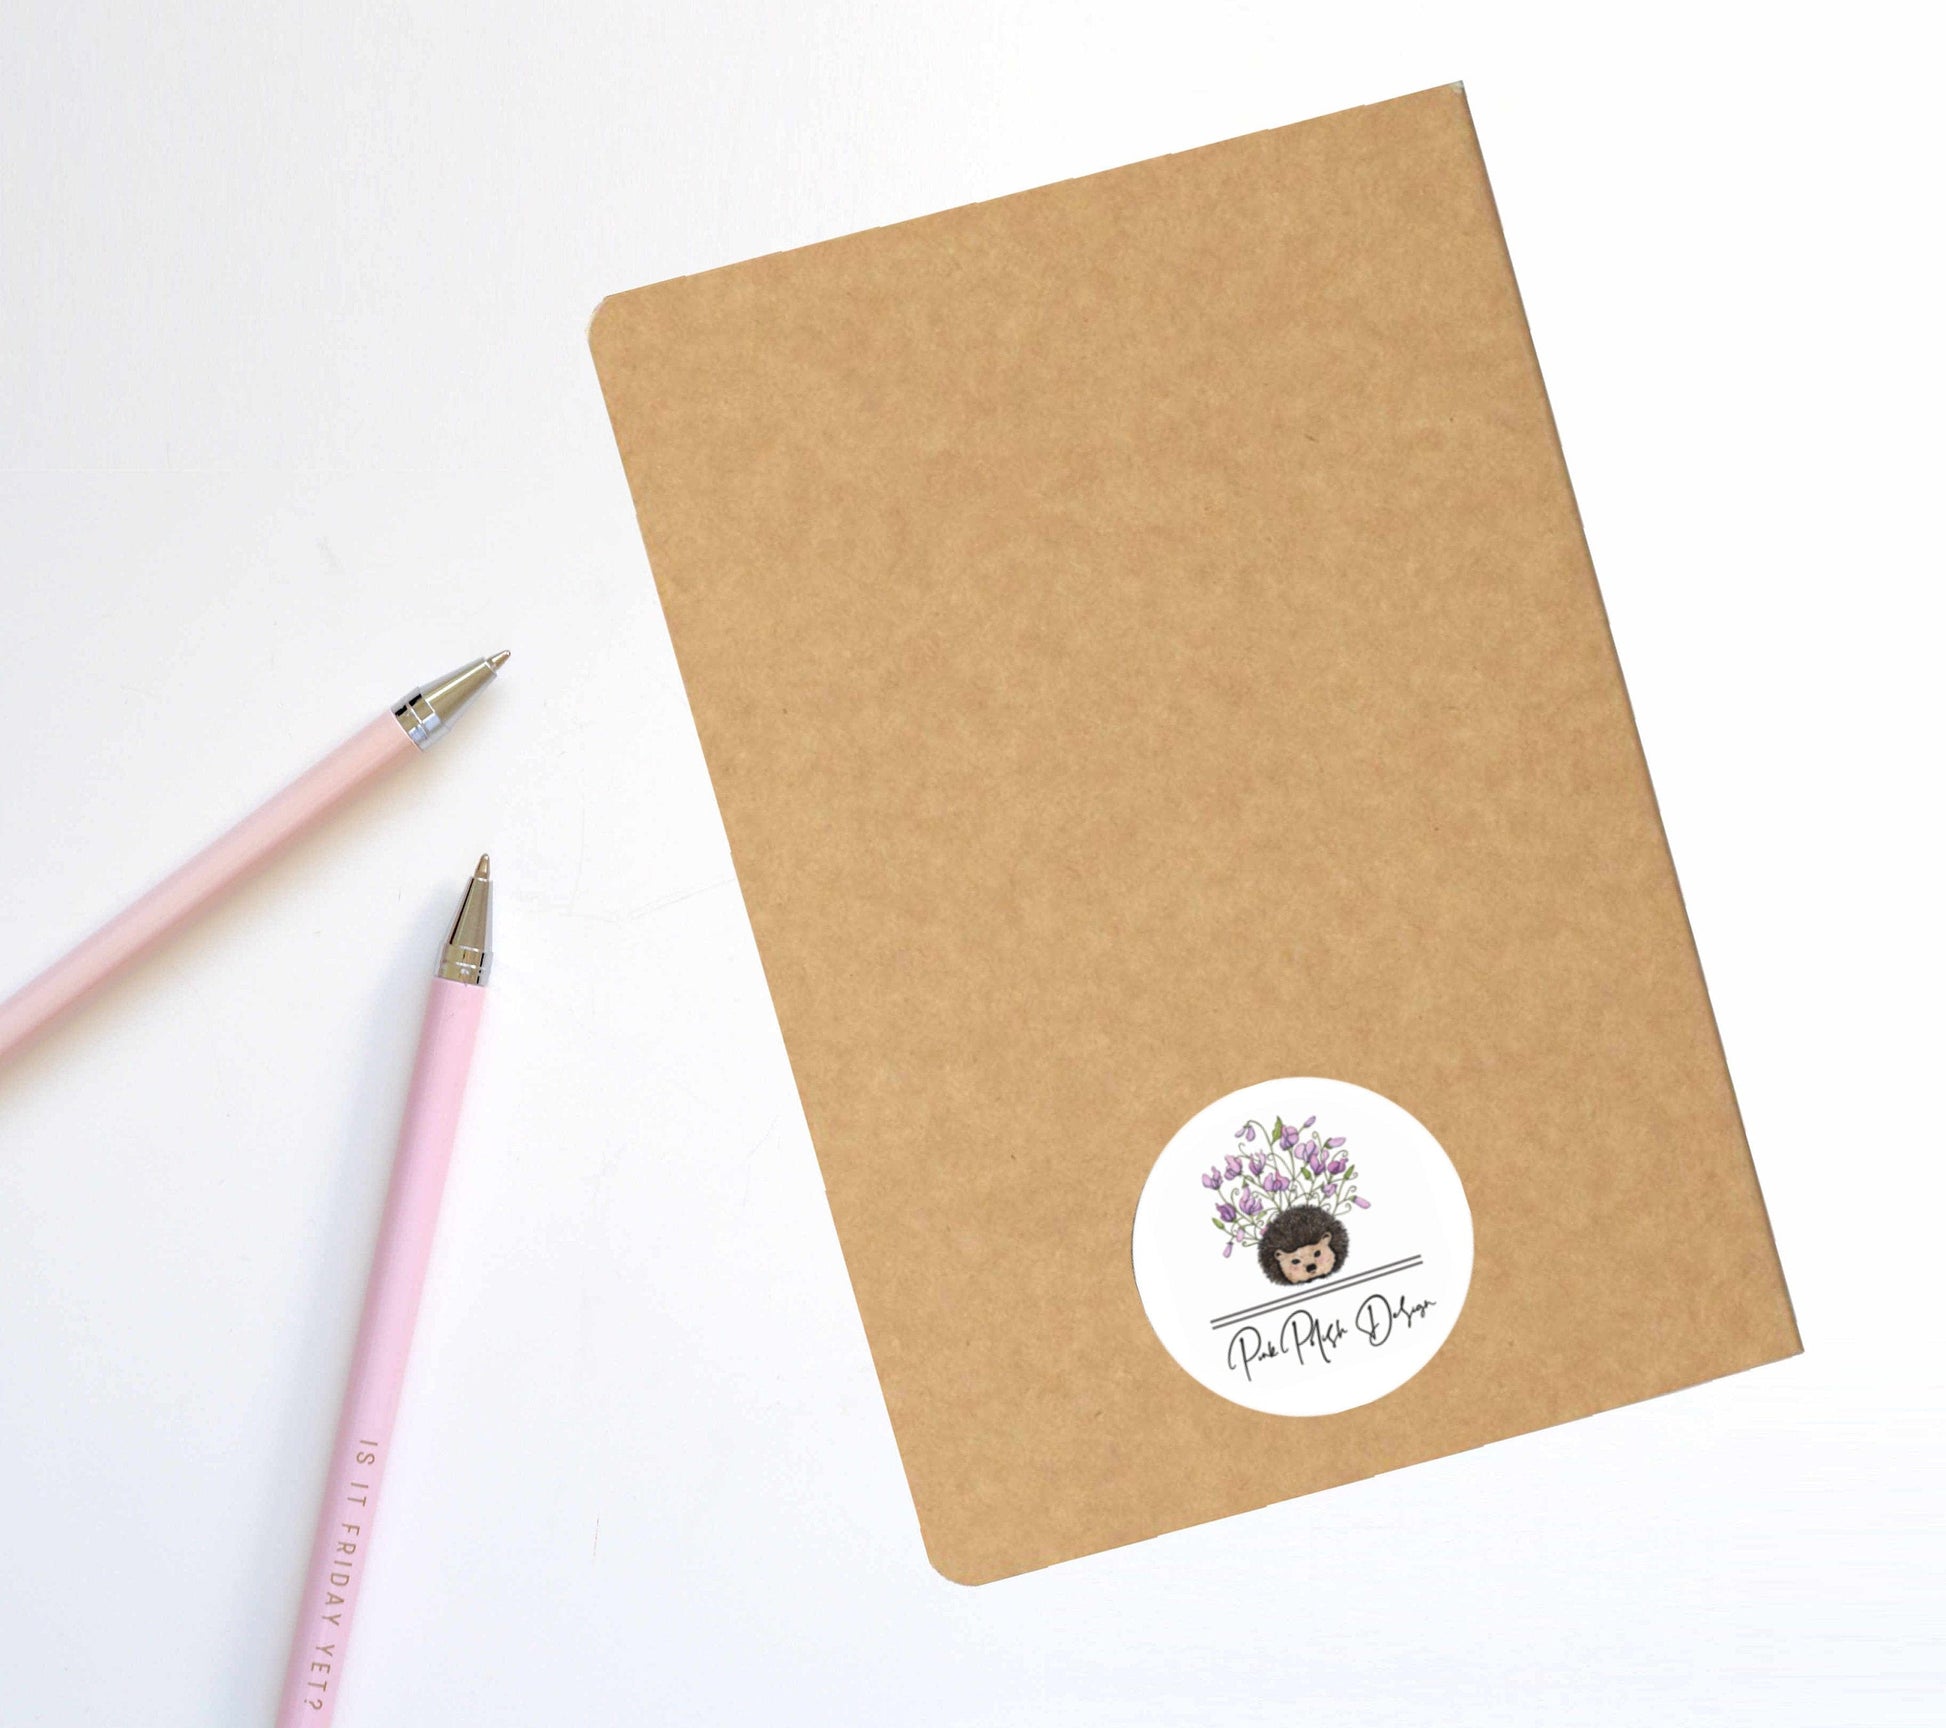 PinkPolish Design Notebook "Speak Up" Finding Your Voice Inspired Notebook / Sketchbook / Journal